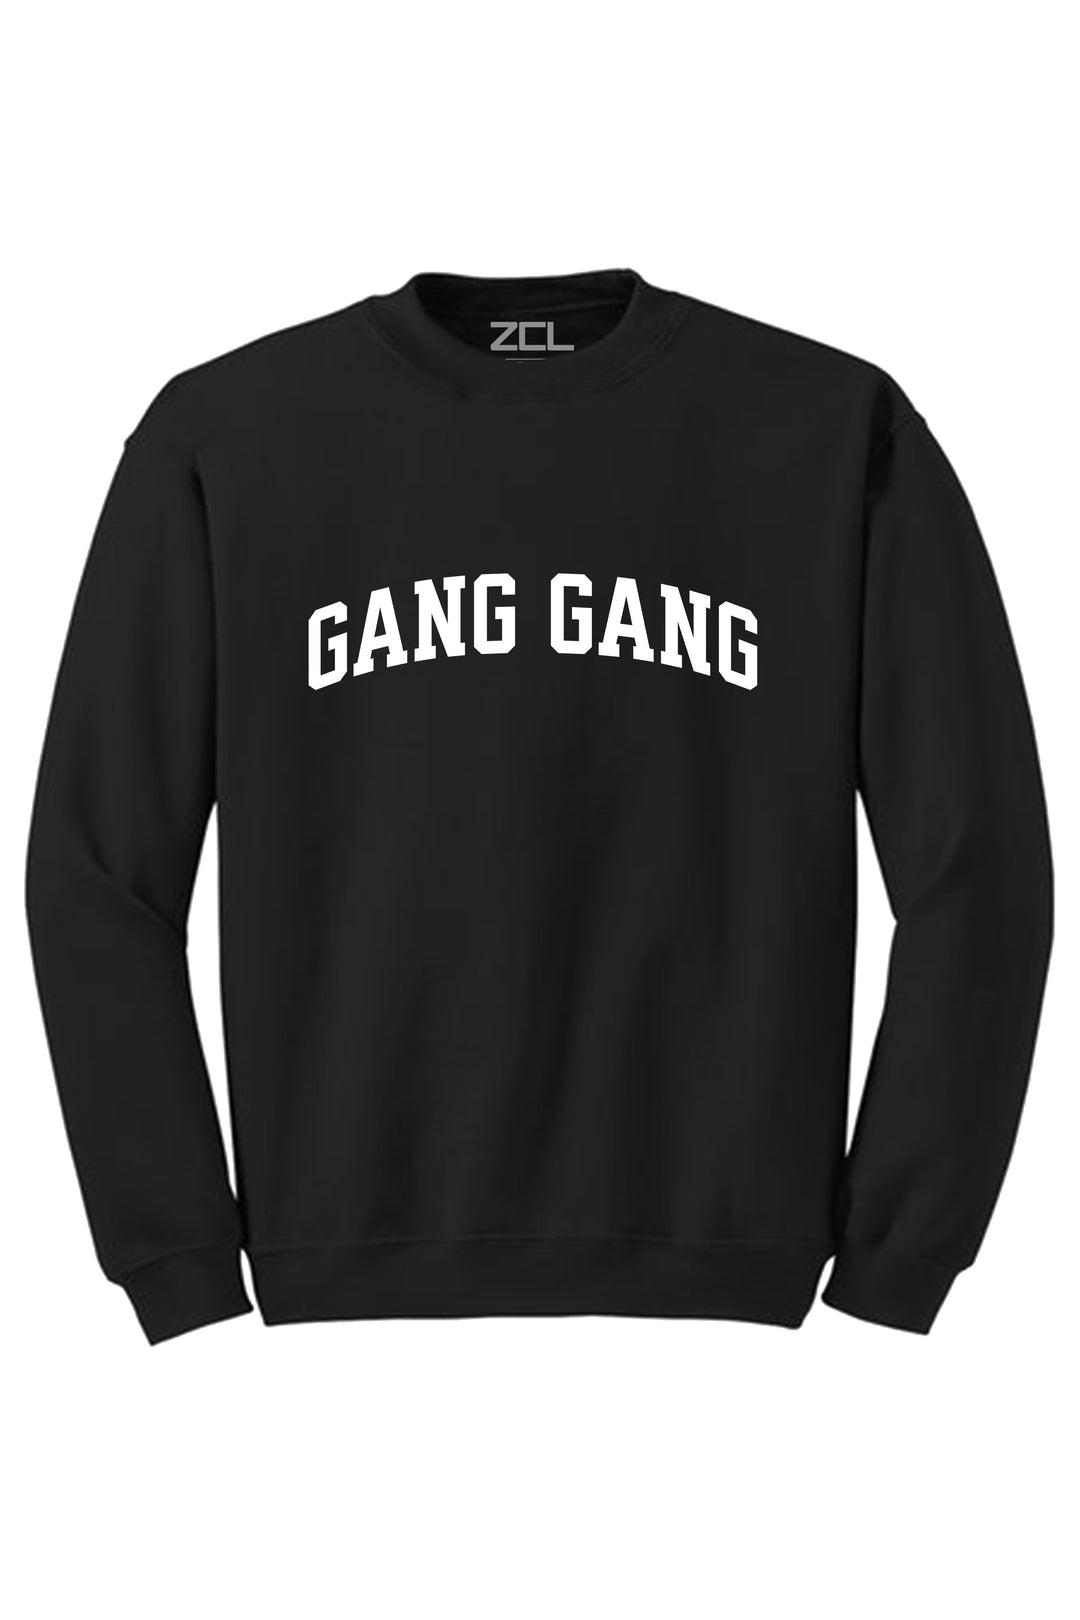 Gang Gang Crewneck Sweatshirt (White Logo) - Zamage